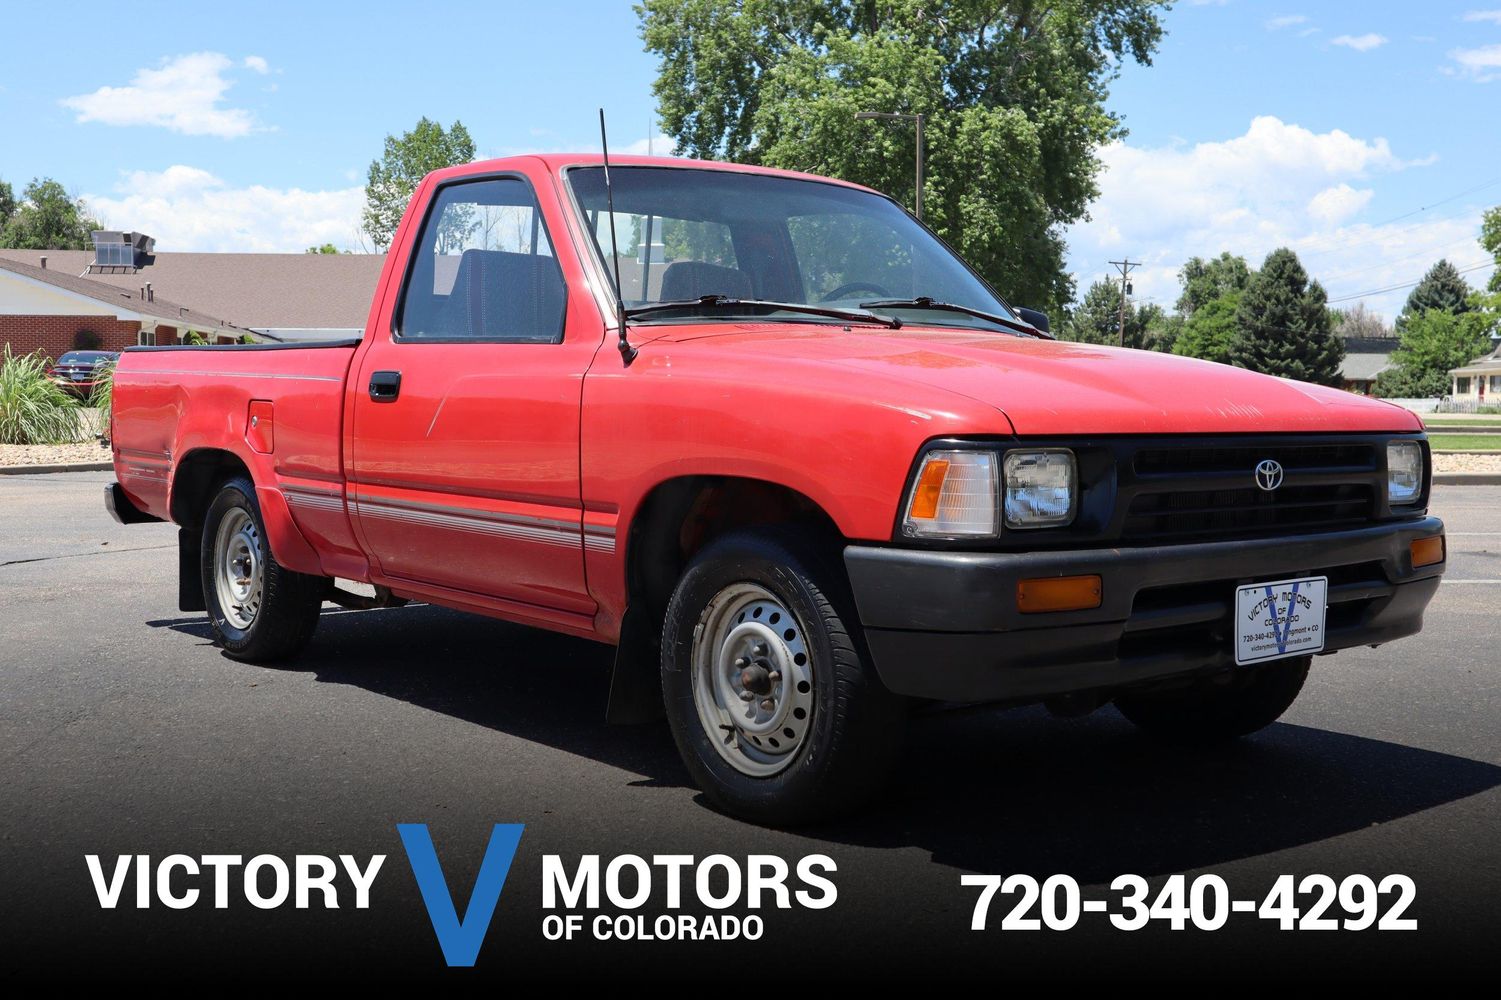 1992 Toyota Pickup Base | Victory Motors of Colorado